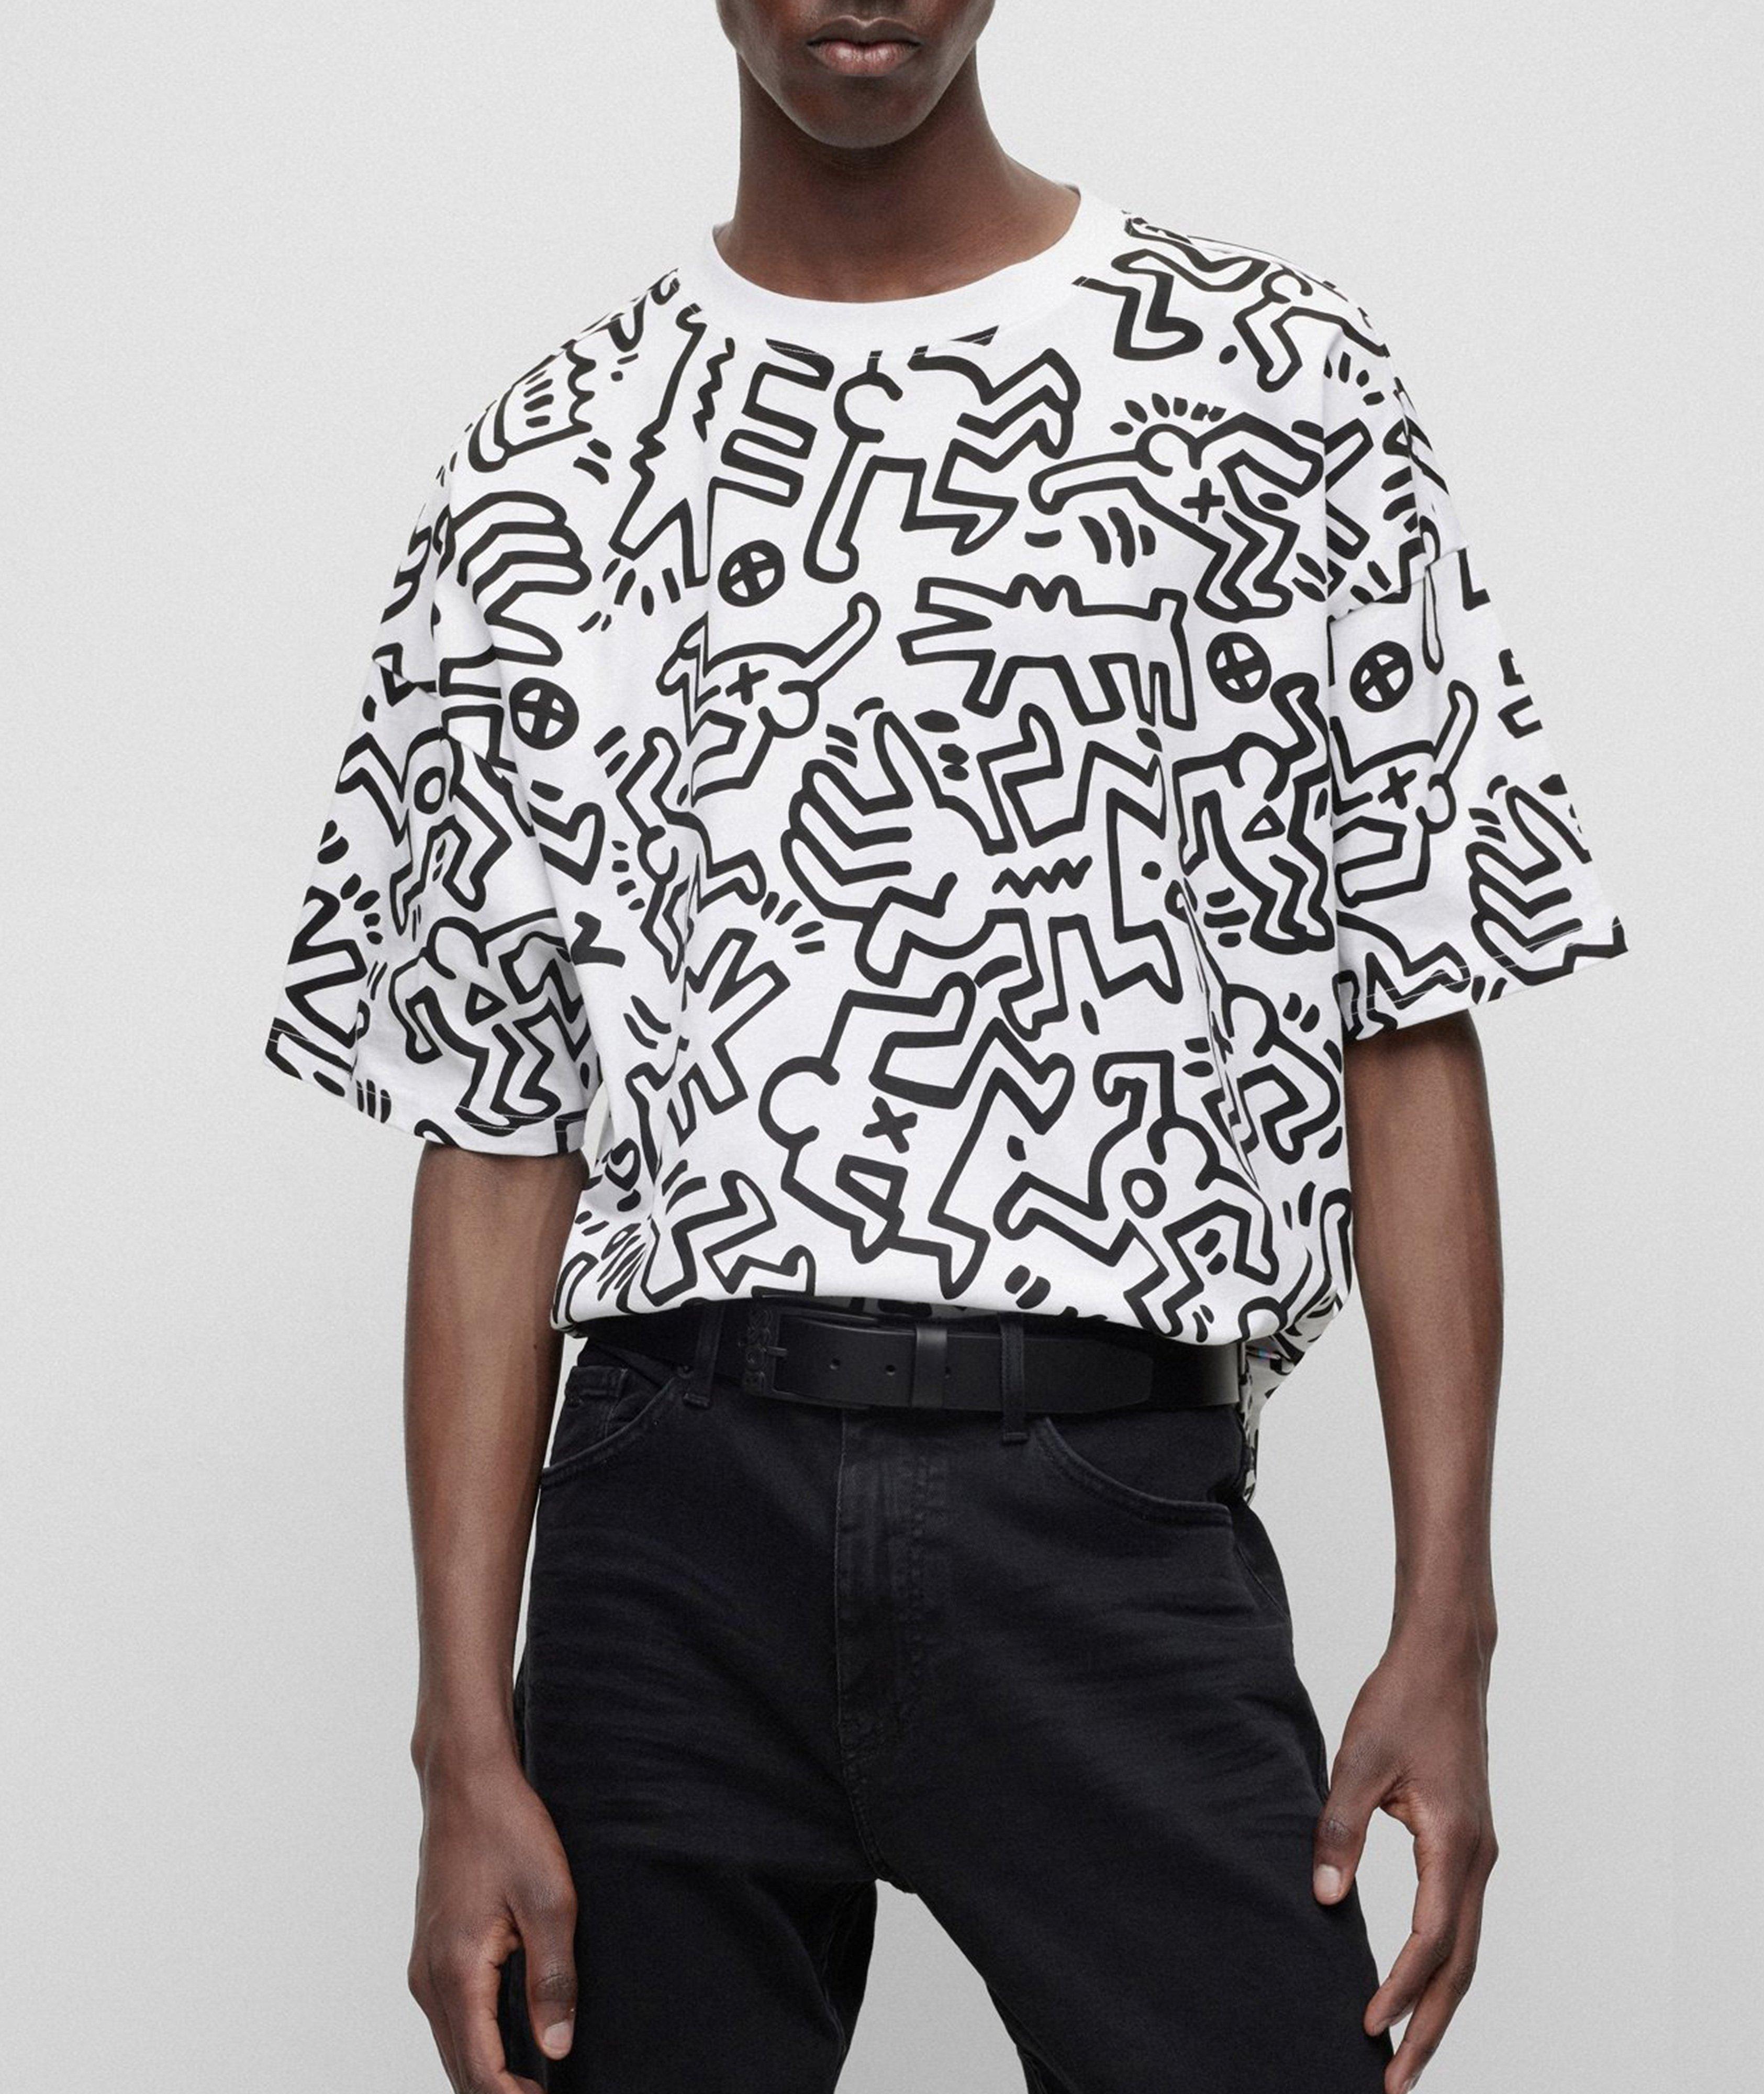 T-shirt en coton, collection Keith Haring image 1